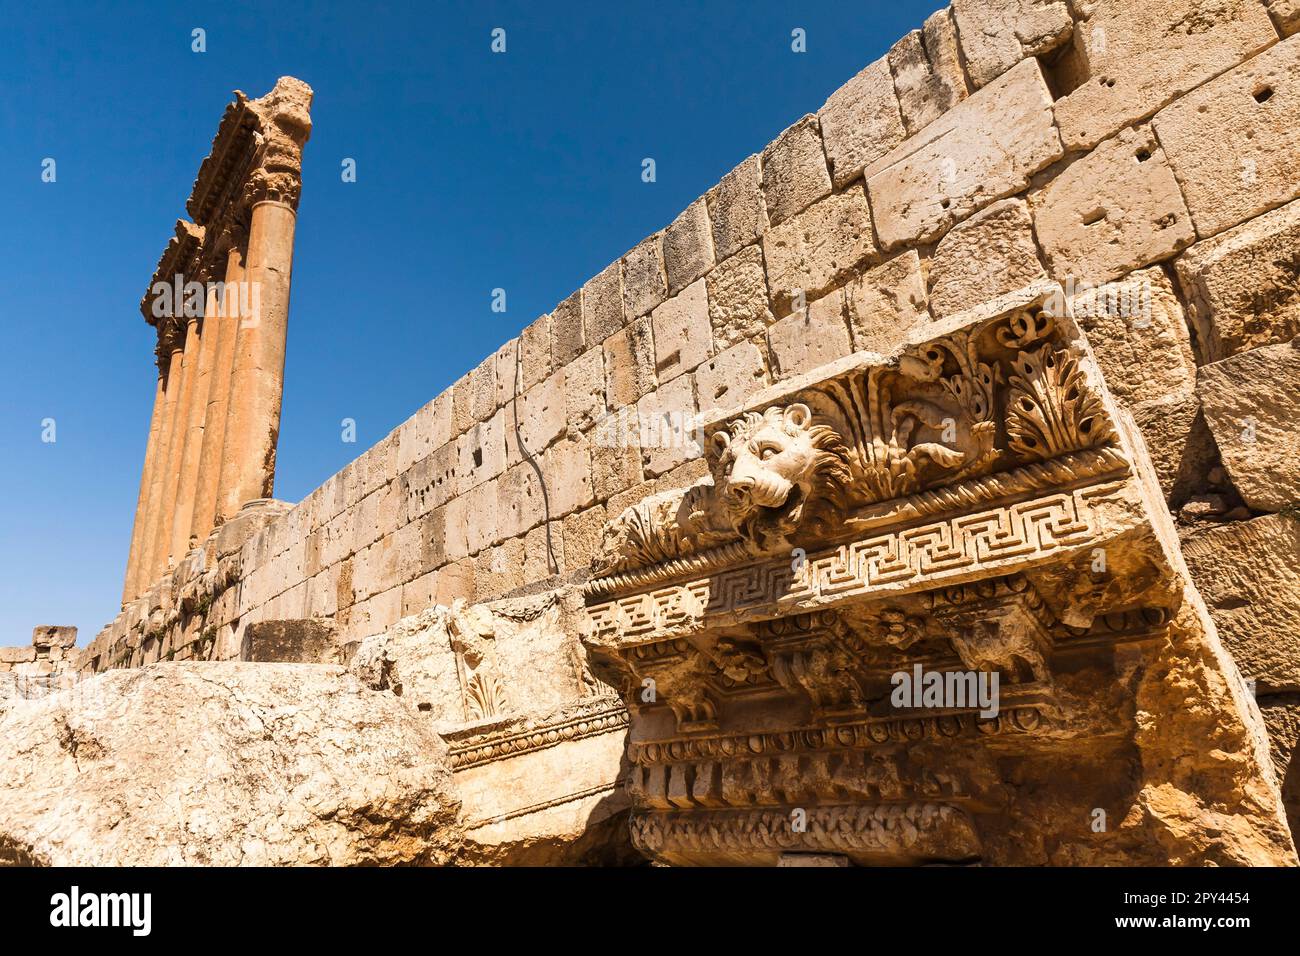 Baalbek, Temple of Jupiter, Largest Roman temple, Carving of Lion head, Bekaa valley, Baalbek, Baalbek-Hermel Governorate, Lebanon, middle east, Asia Stock Photo